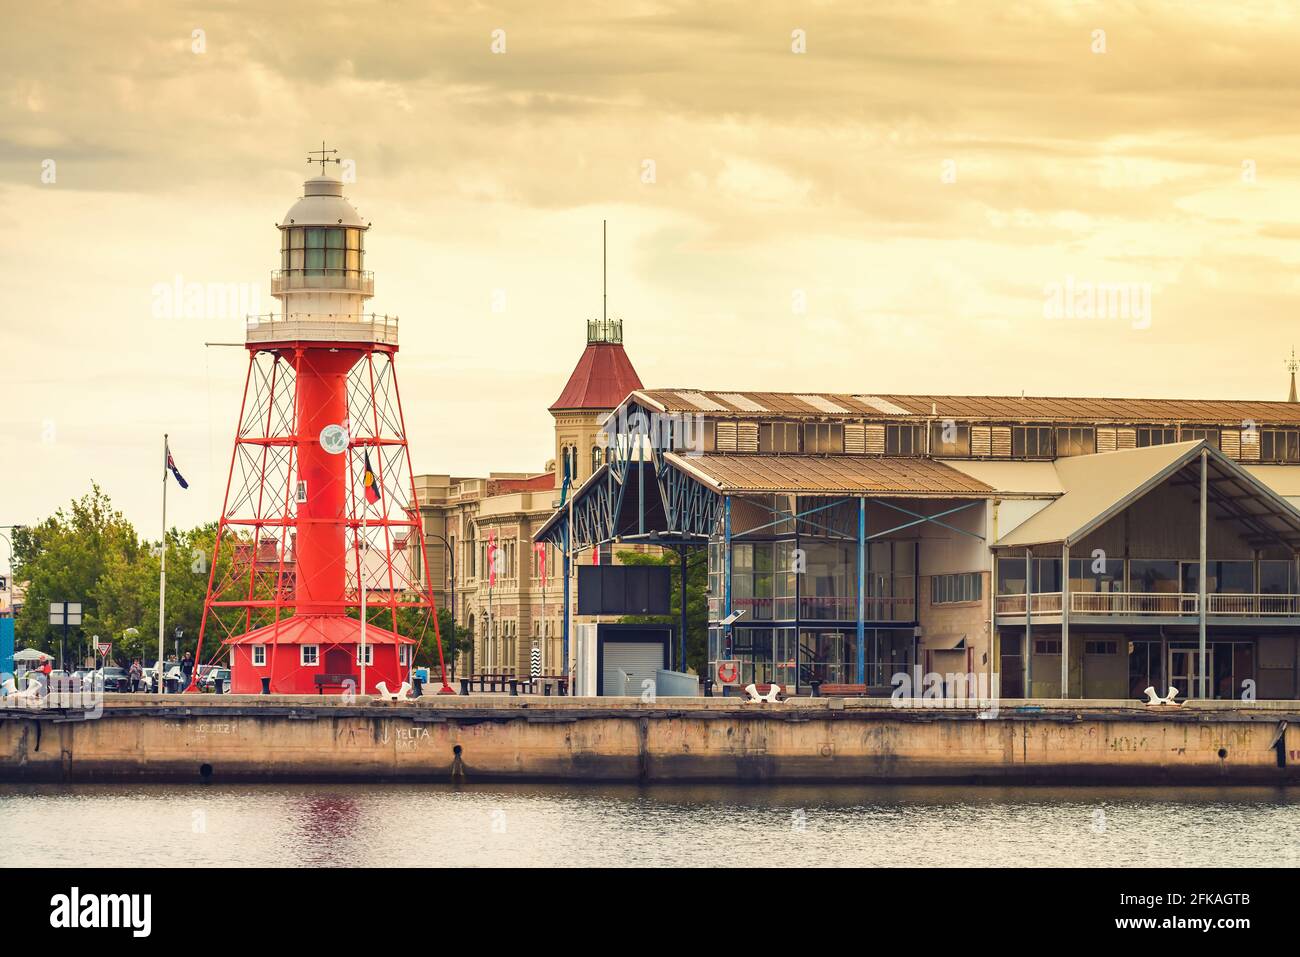 Port Adelaide, Australien - 8. Dezember 2018: Der berühmte Leuchtturm von Port Adelaide mit dem Fishermen's Wharf Market bei Sonnenuntergang über dem Port River Stockfoto